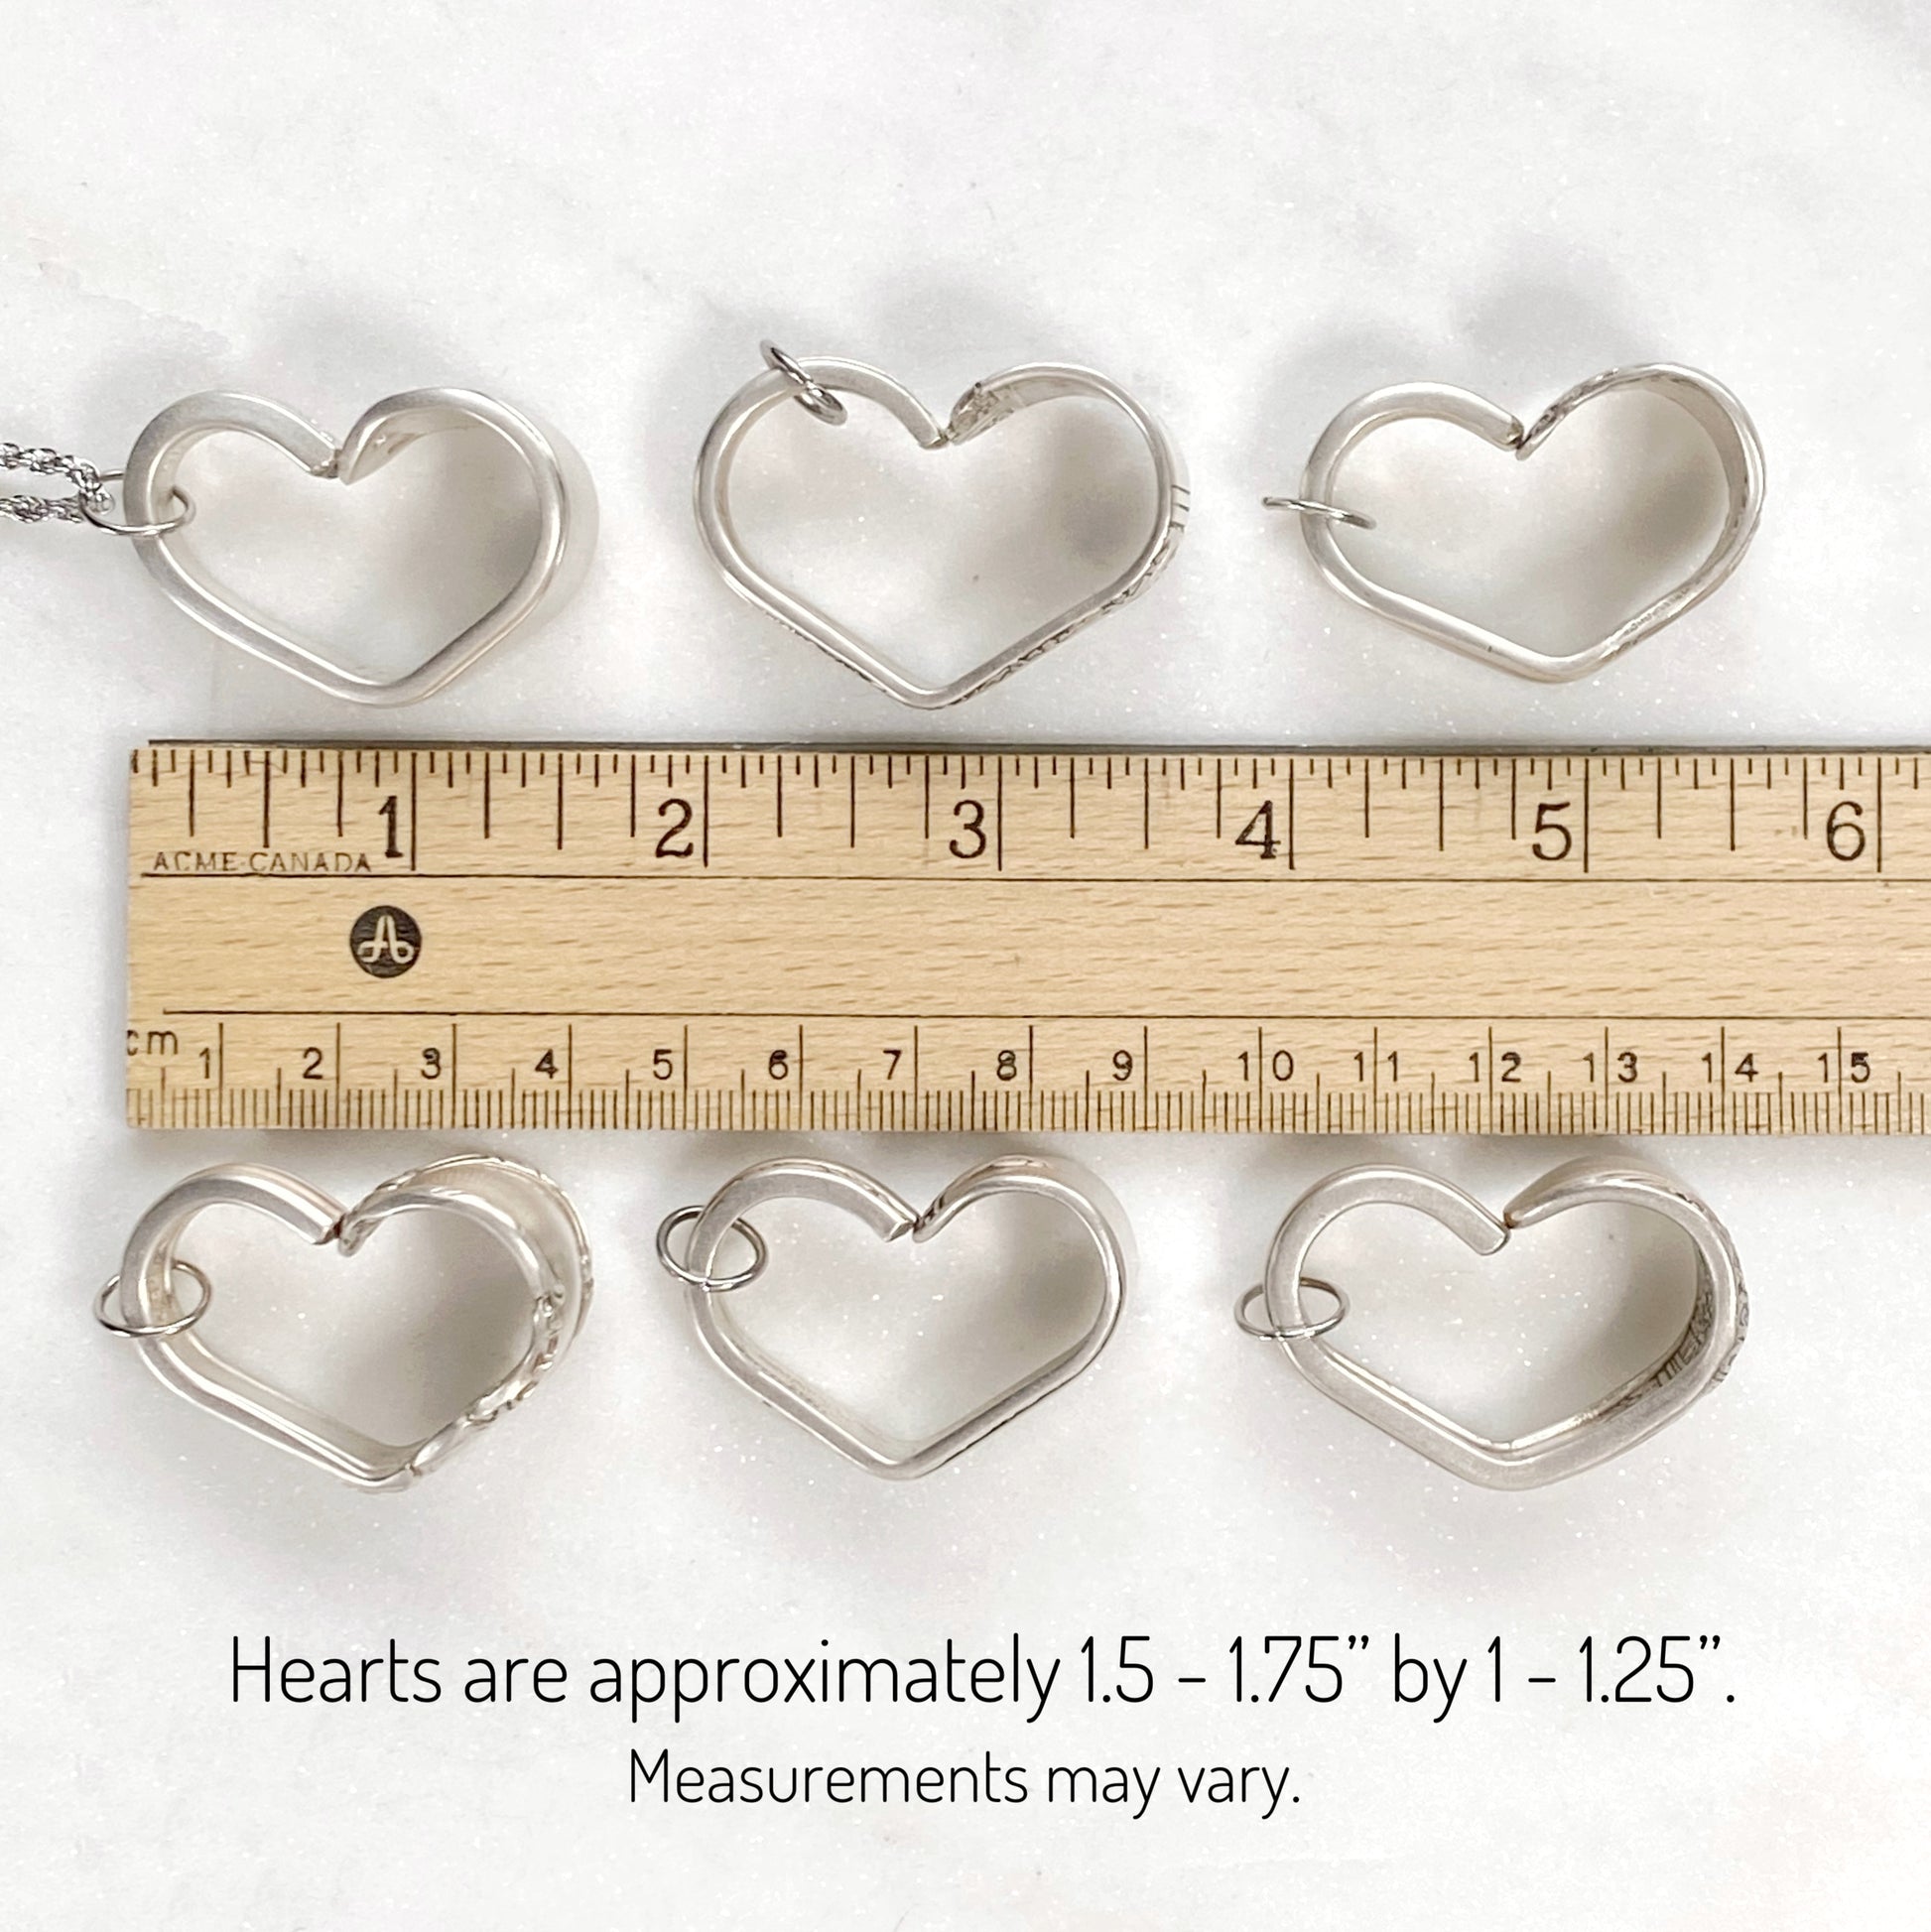 Flirtation 1959, Floating Heart, Vintage Spoon Jewelry Hearts callistafaye   